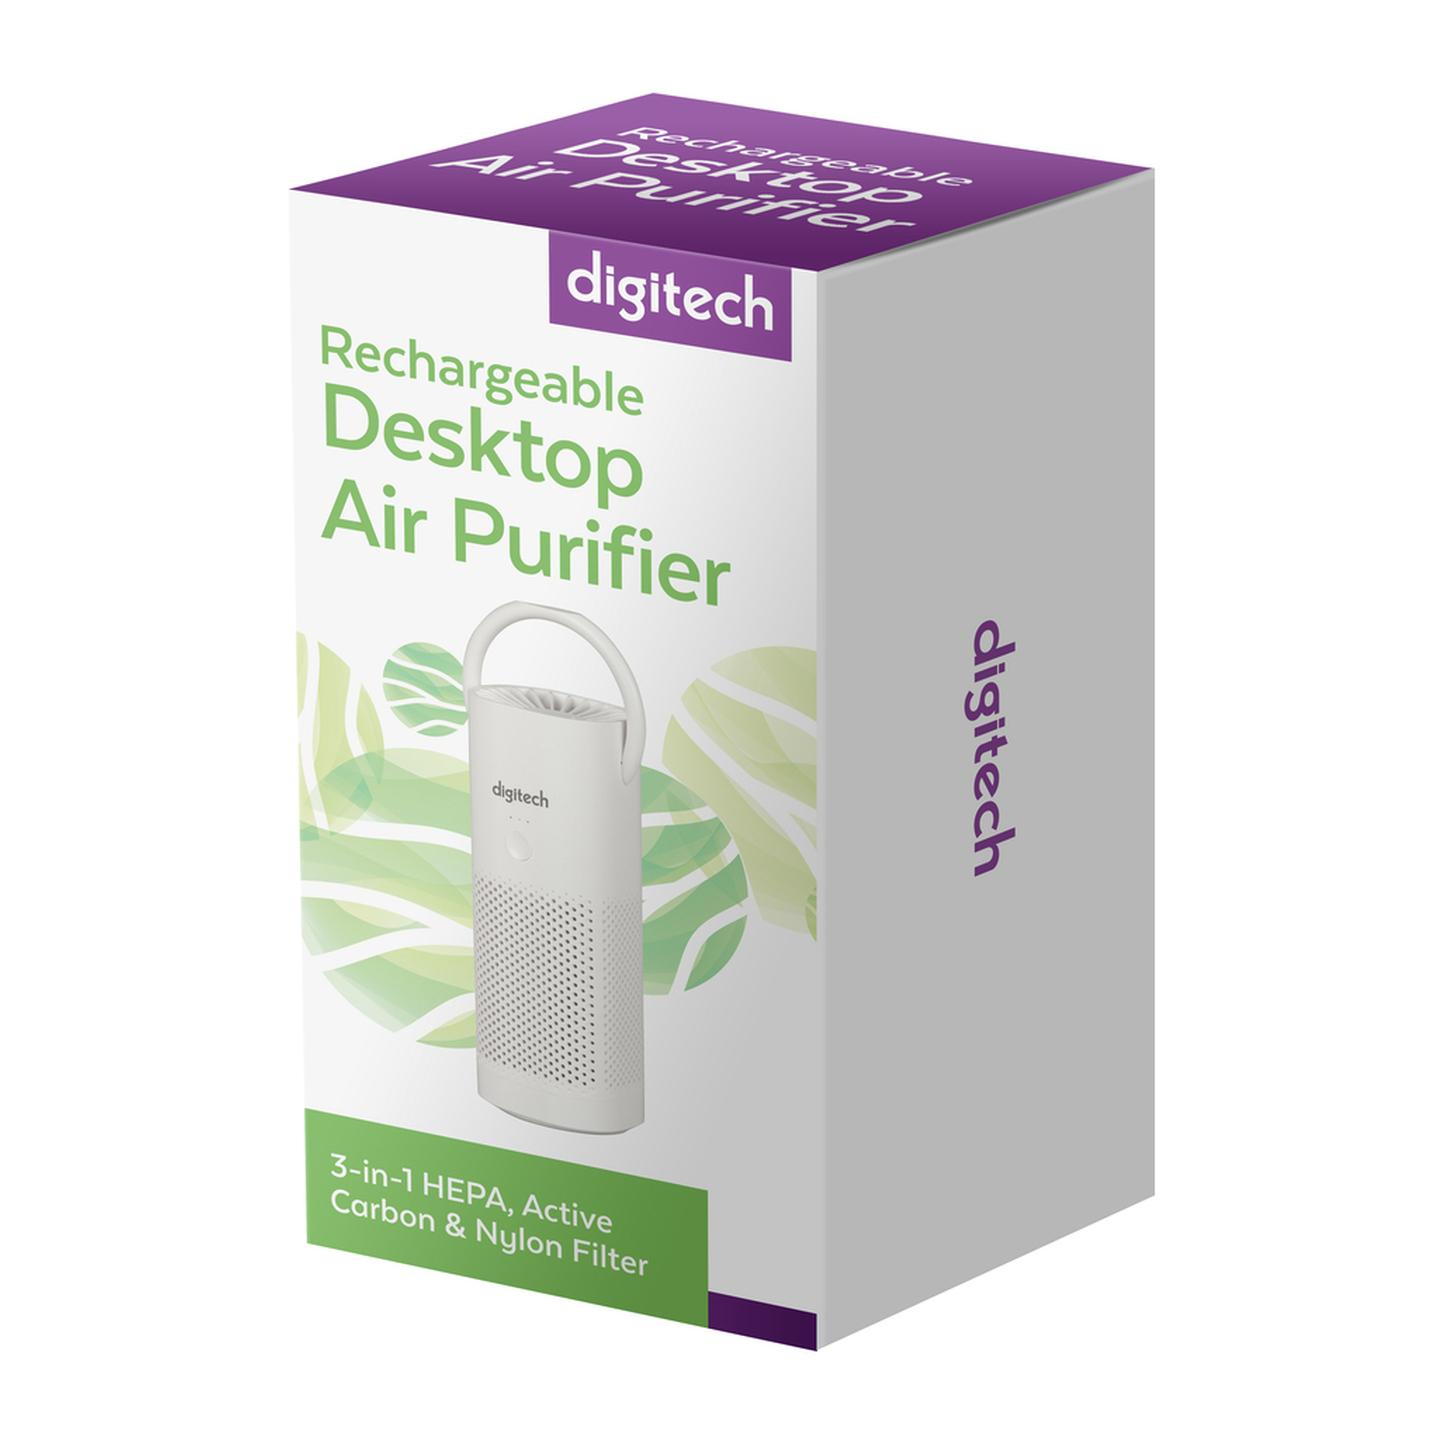 Rechargeable Desktop Air Purifier